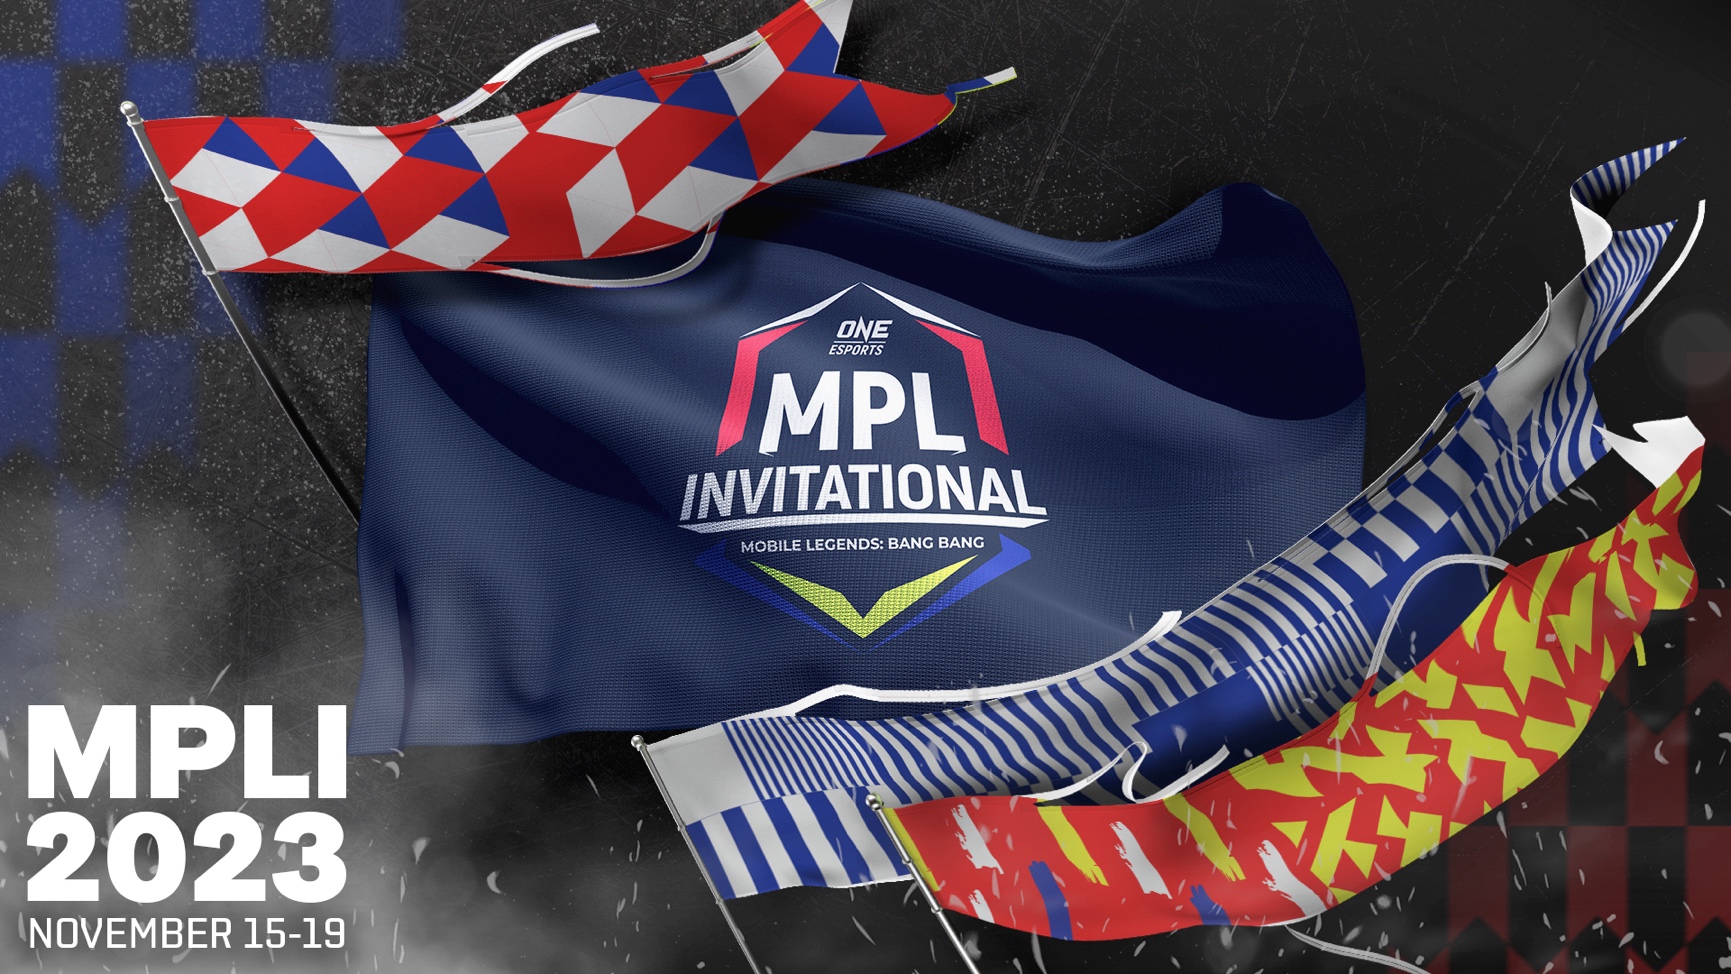 ONE Esports unveils details on ONE Esports MPL Invitational 2023